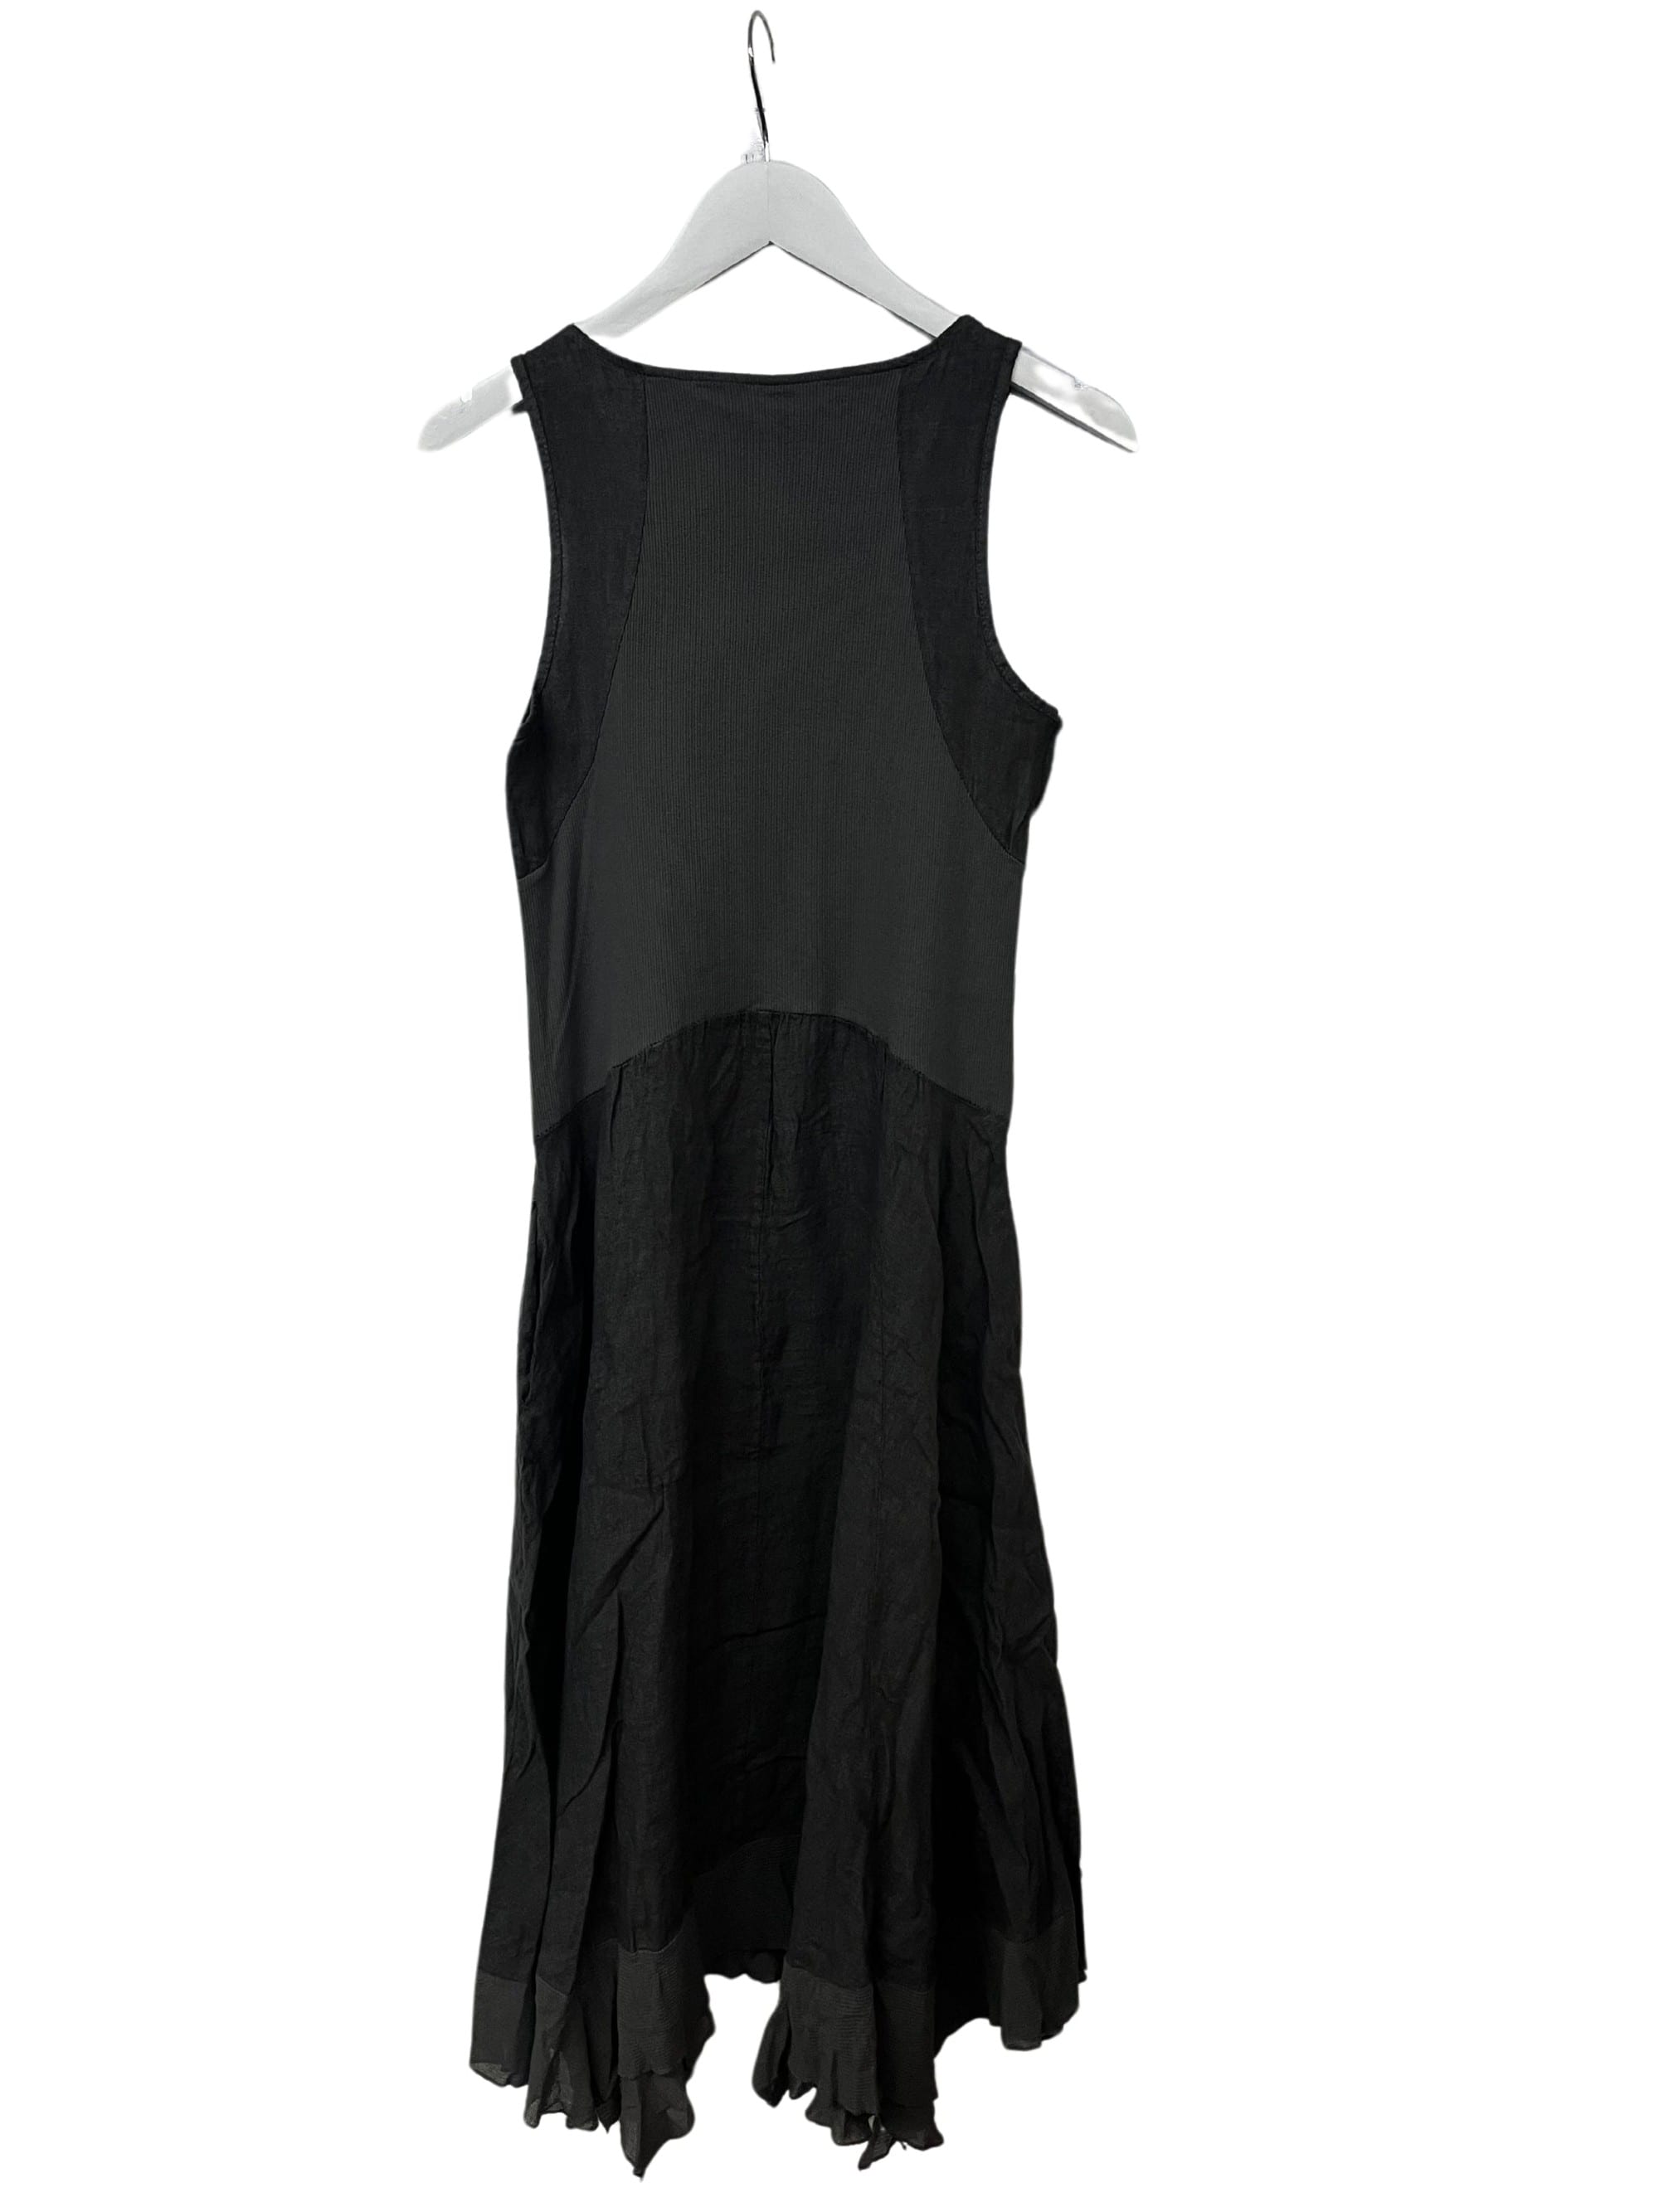 Inizio Dark Grey Linen Dress - clever alice